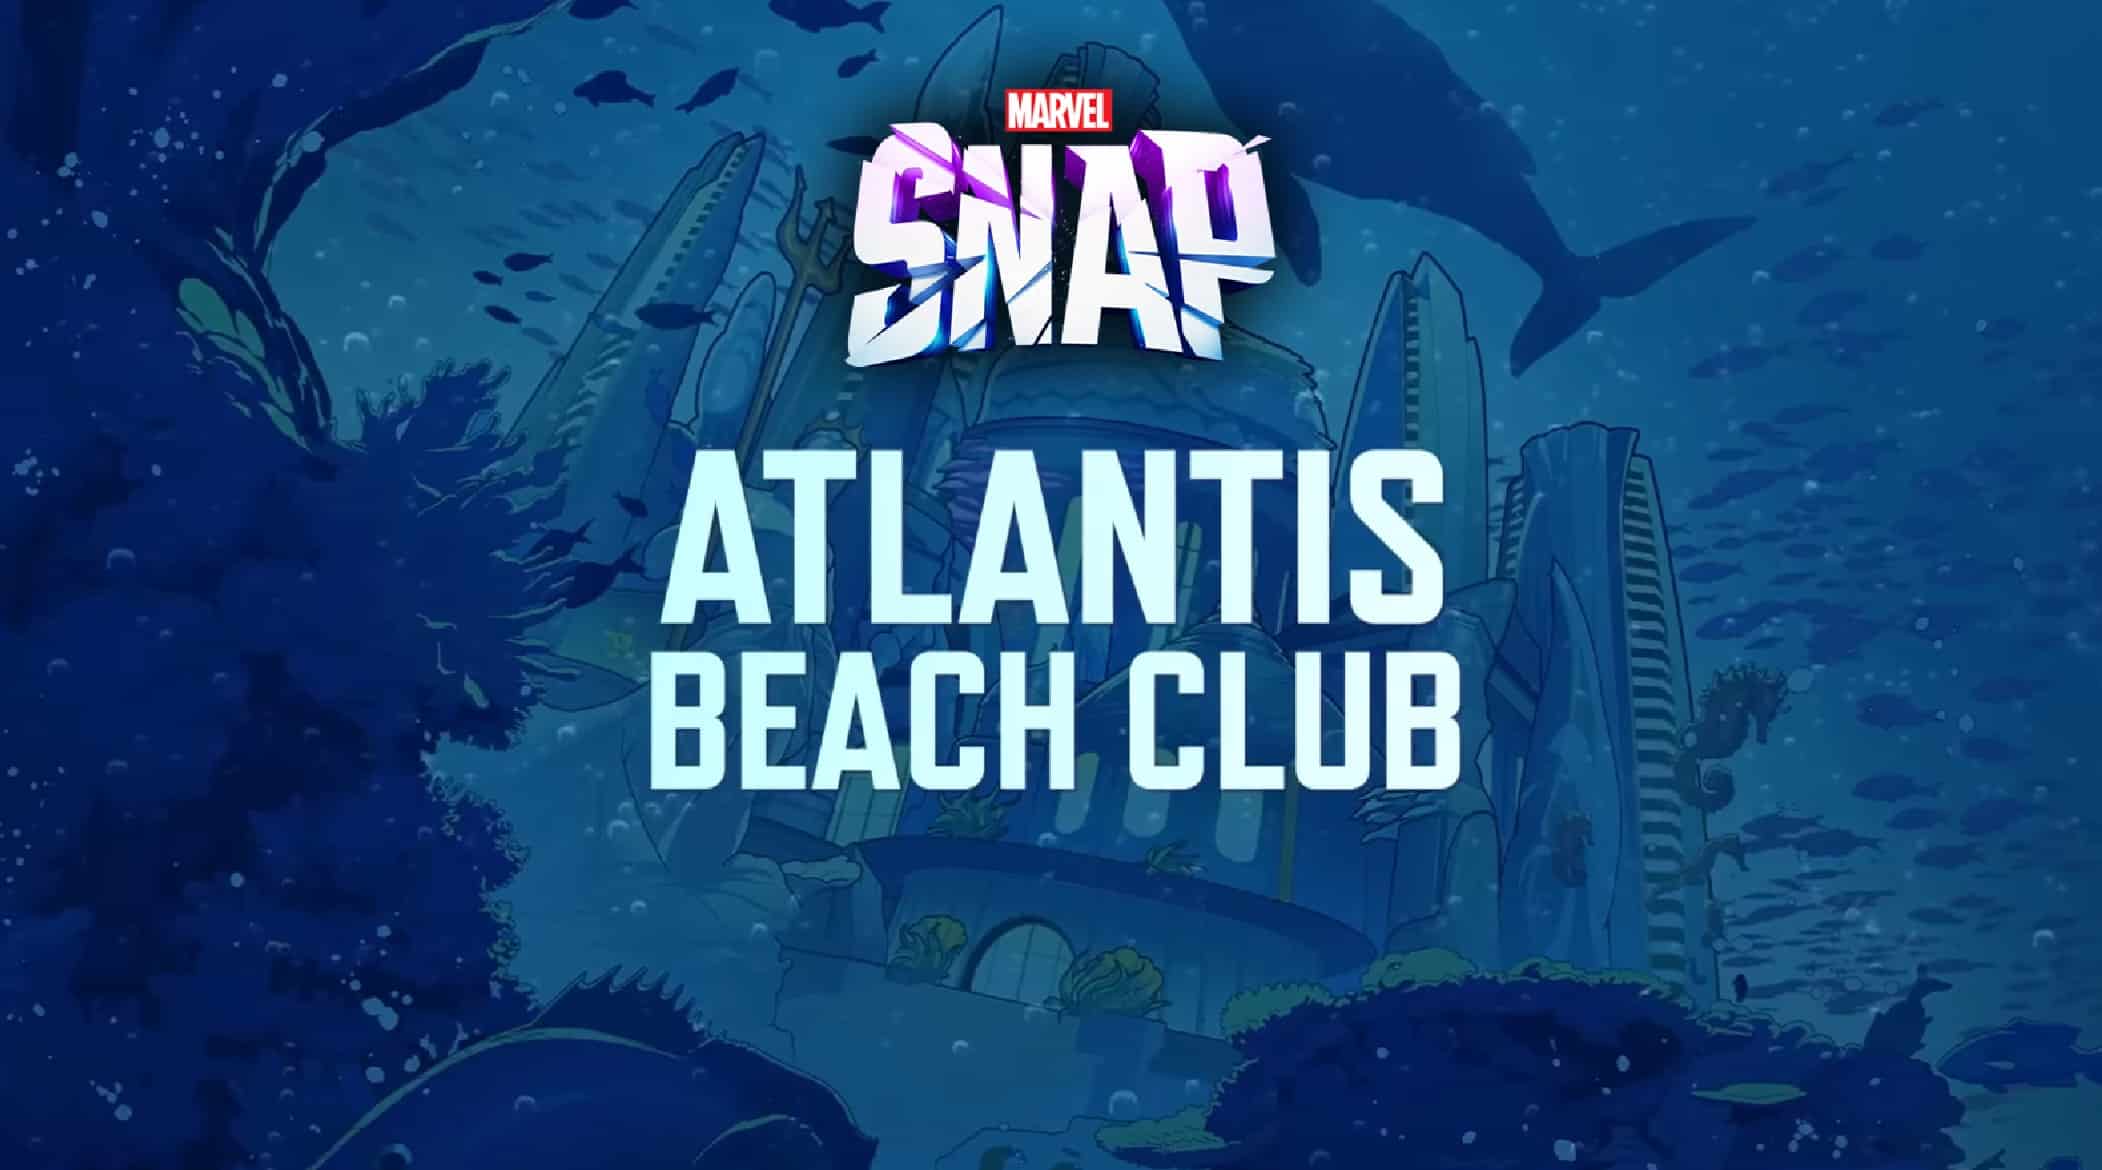 Marvel Snap Atlantis Beach Club artwork